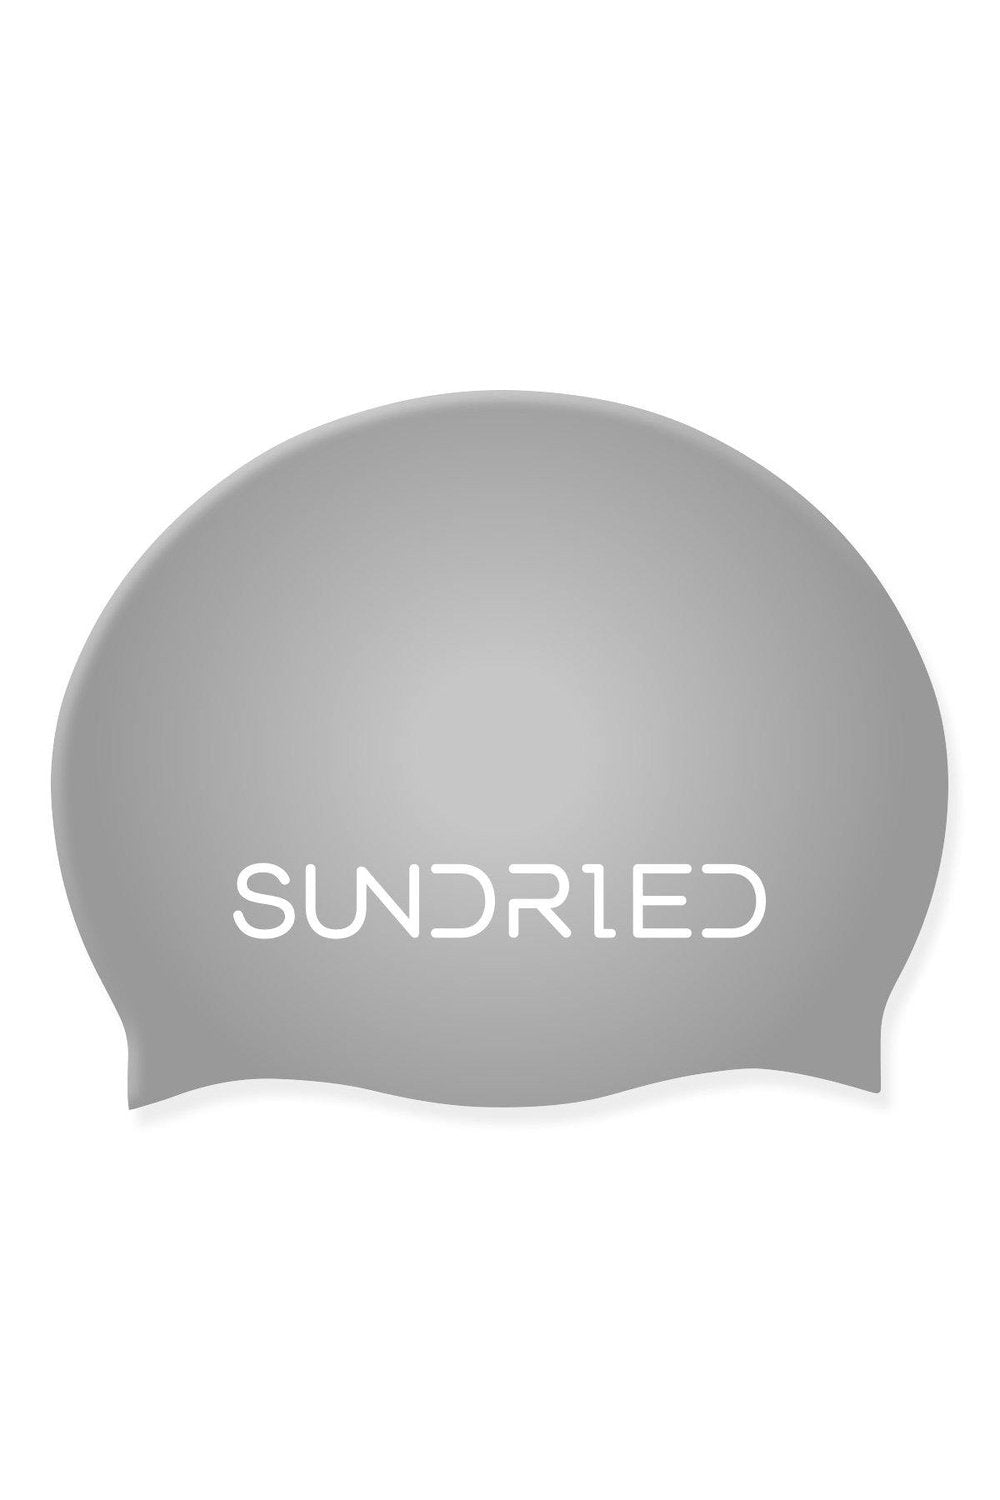 Sundried Swim Hat Accessories Grey SD0111 Grey Activewear